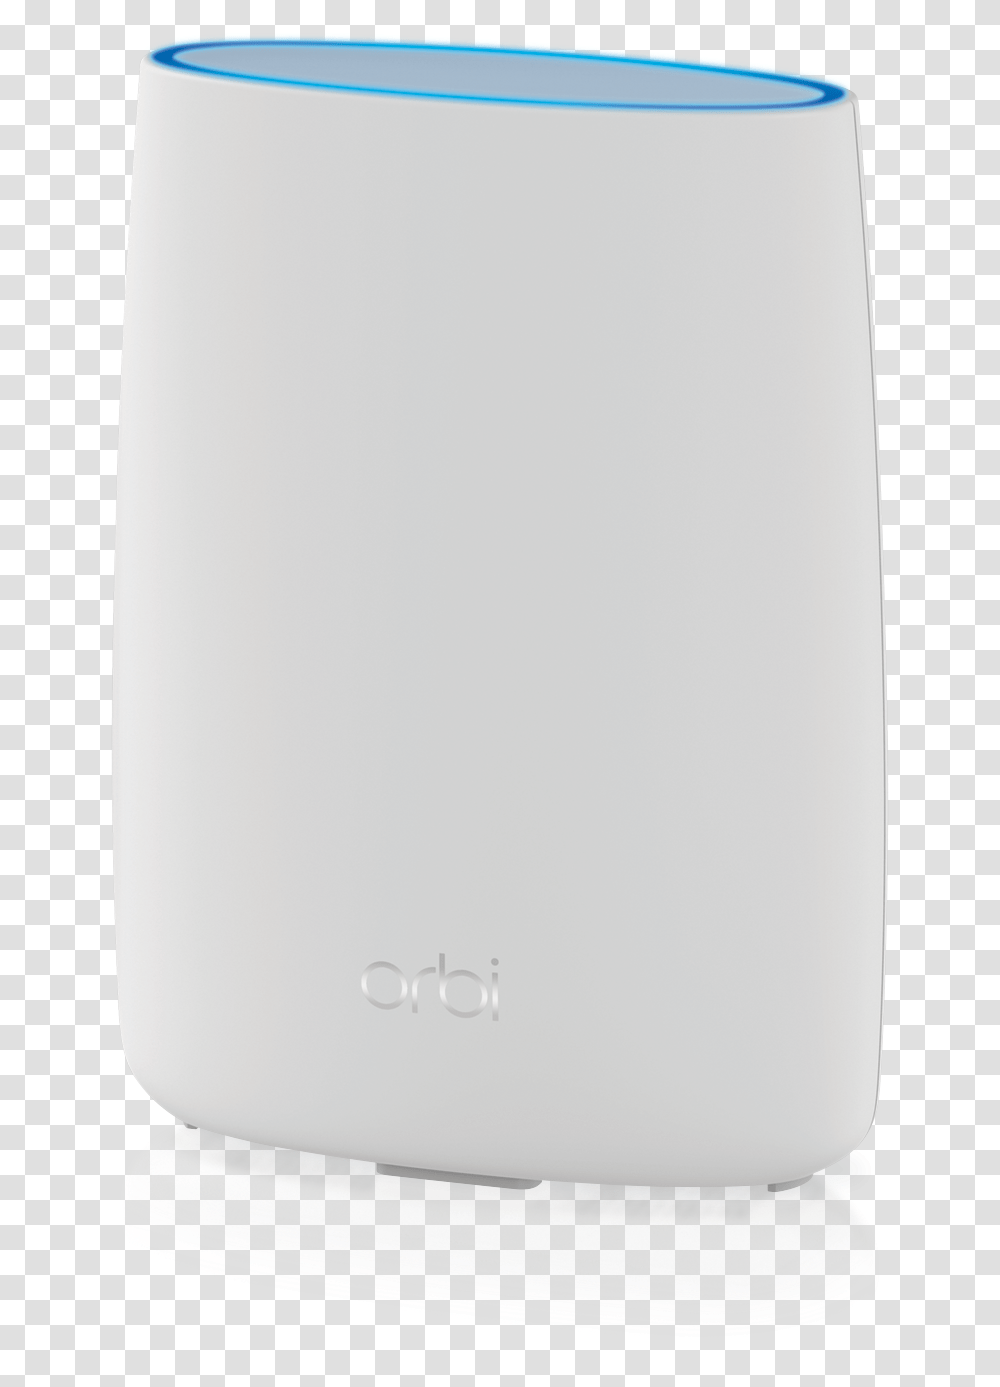 Orbi Gadget, Phone, Electronics, Mobile Phone, Cell Phone Transparent Png